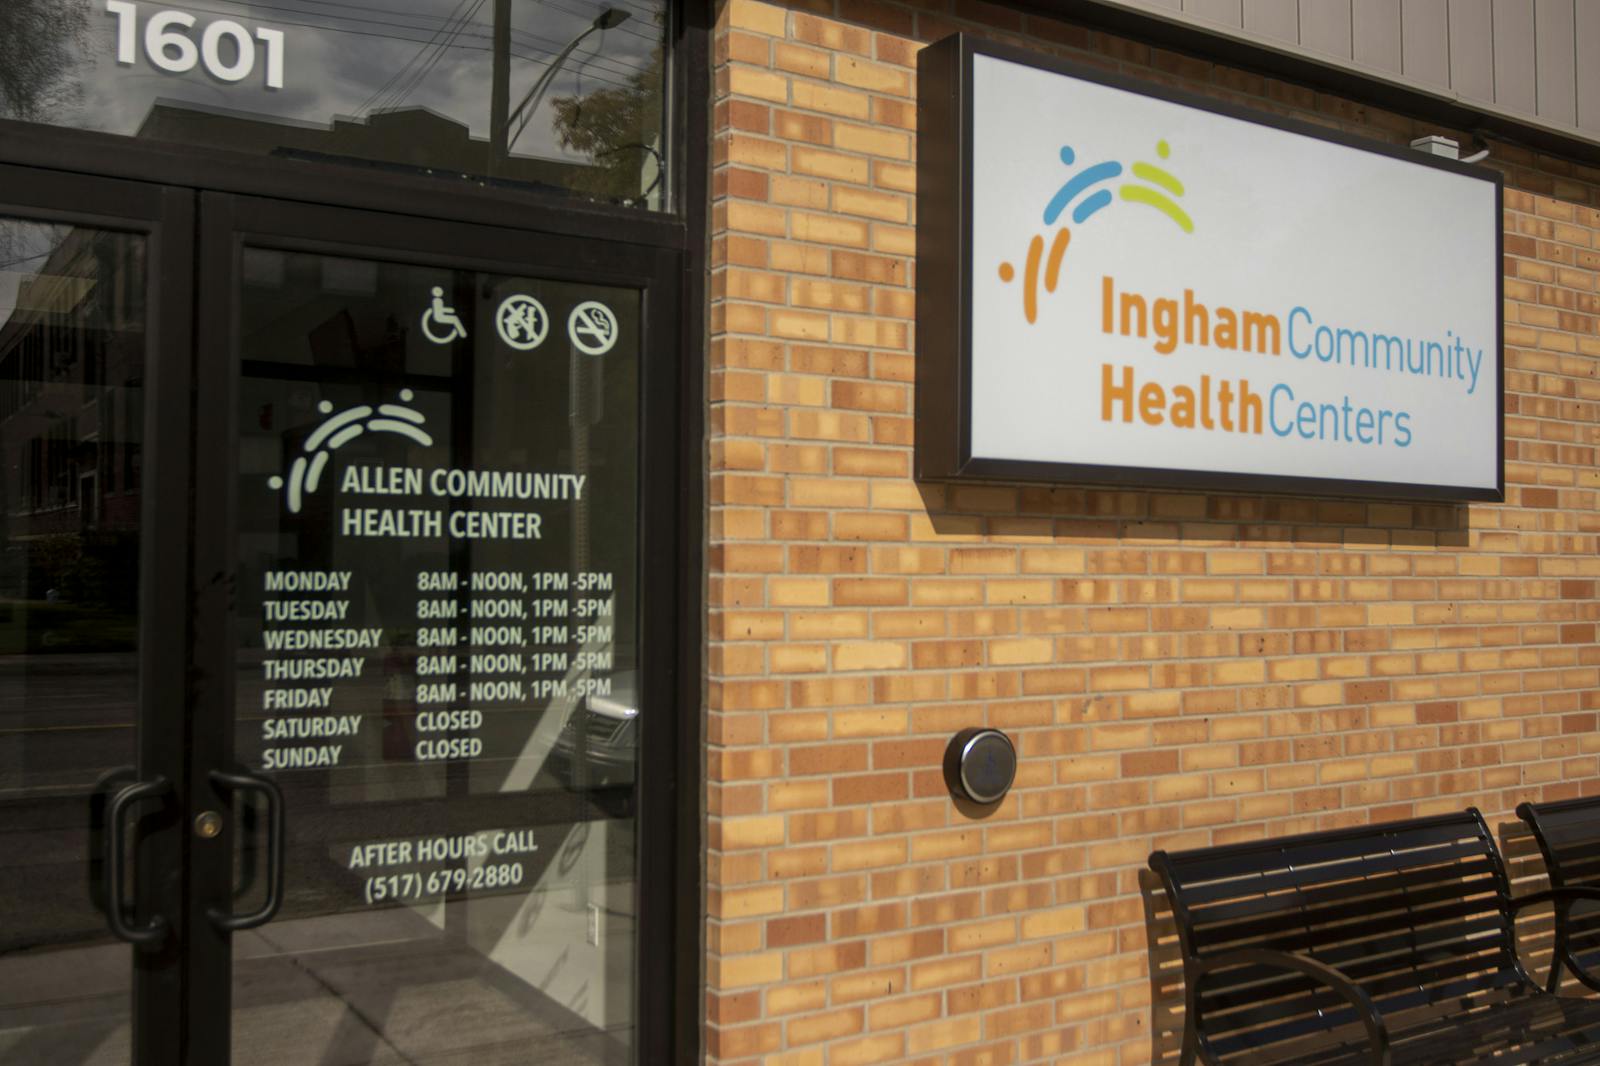 Allen Community Health Center aims to service underserved communities